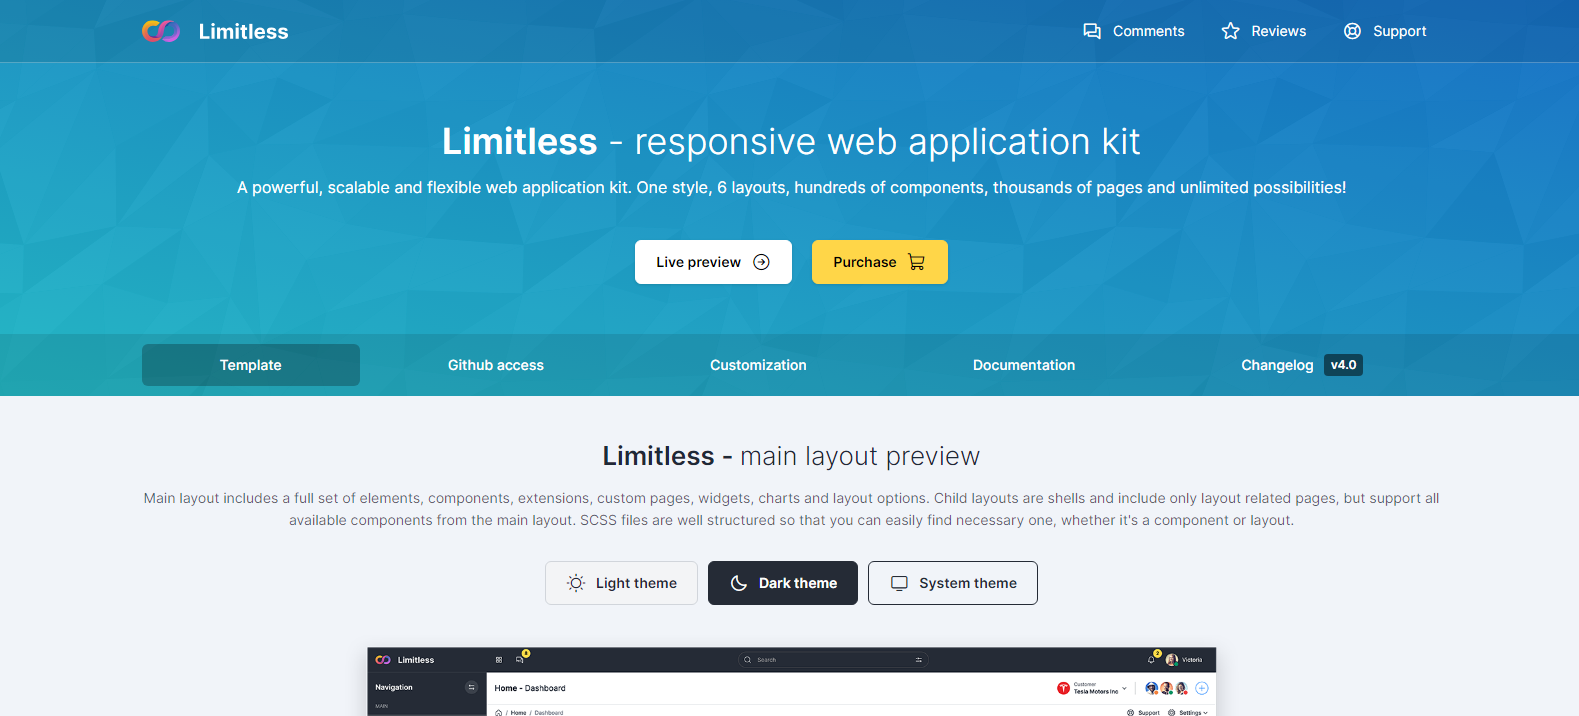 Limitless v4.0 - Responsive Web Application Kit